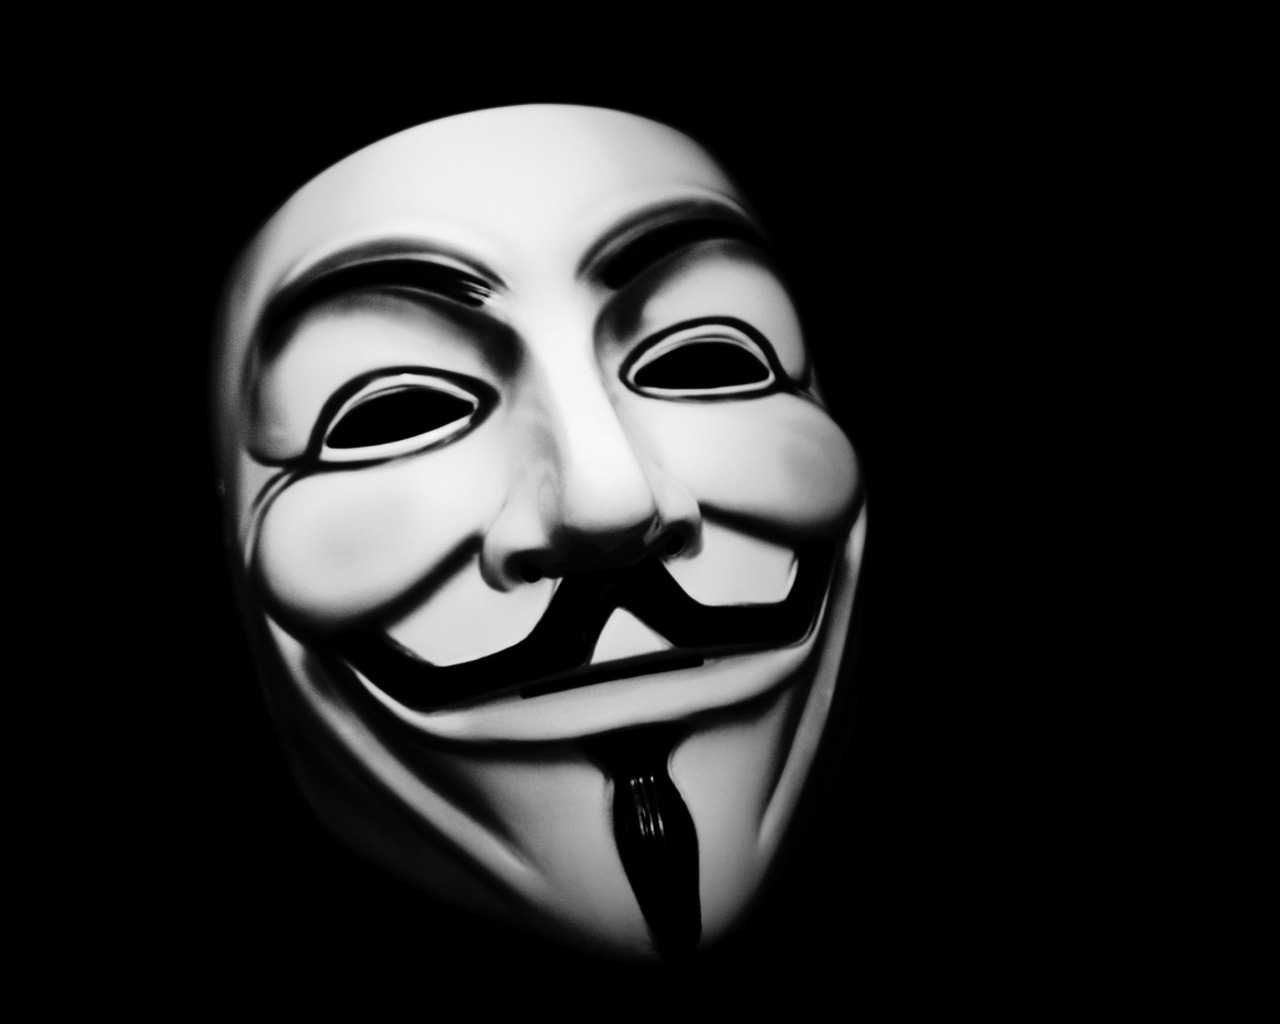 Vendetta Mask for 1280 x 1024 resolution